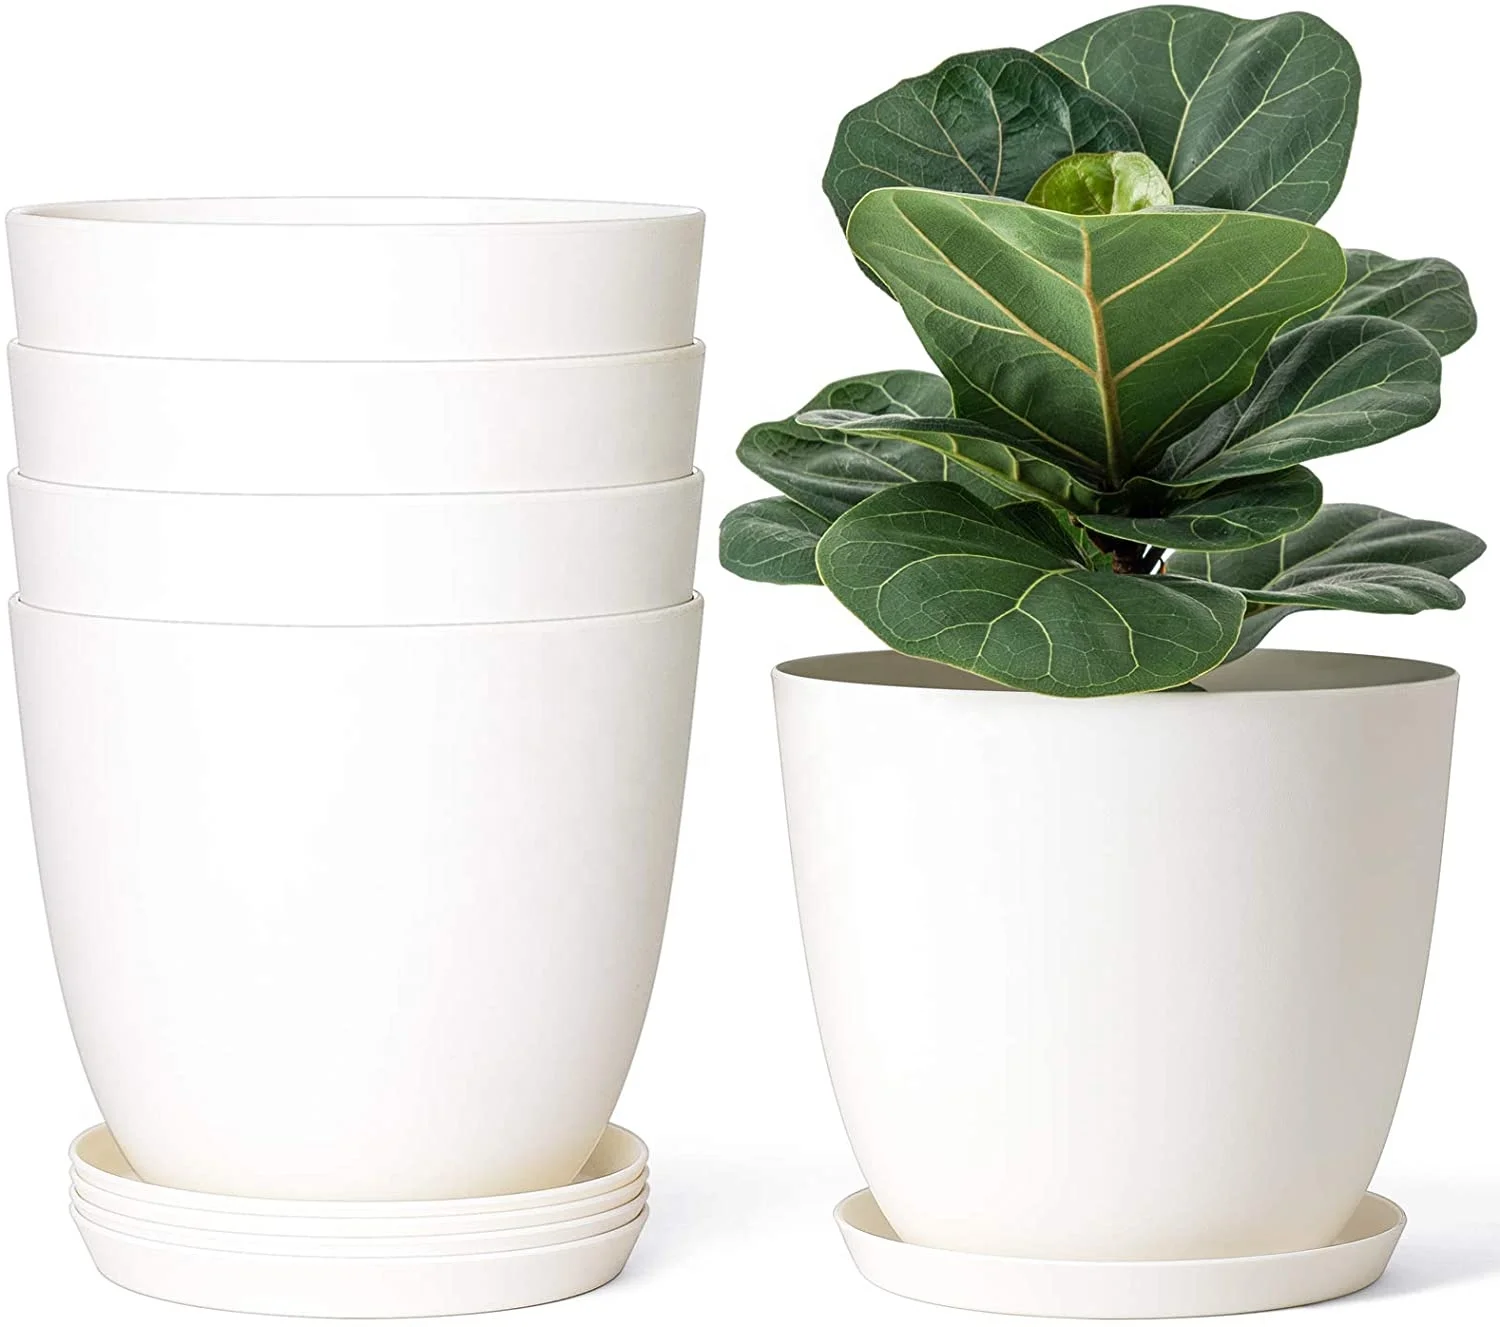 Home Indoor Self Watering Pot Plants Small Smart Planters Plastic